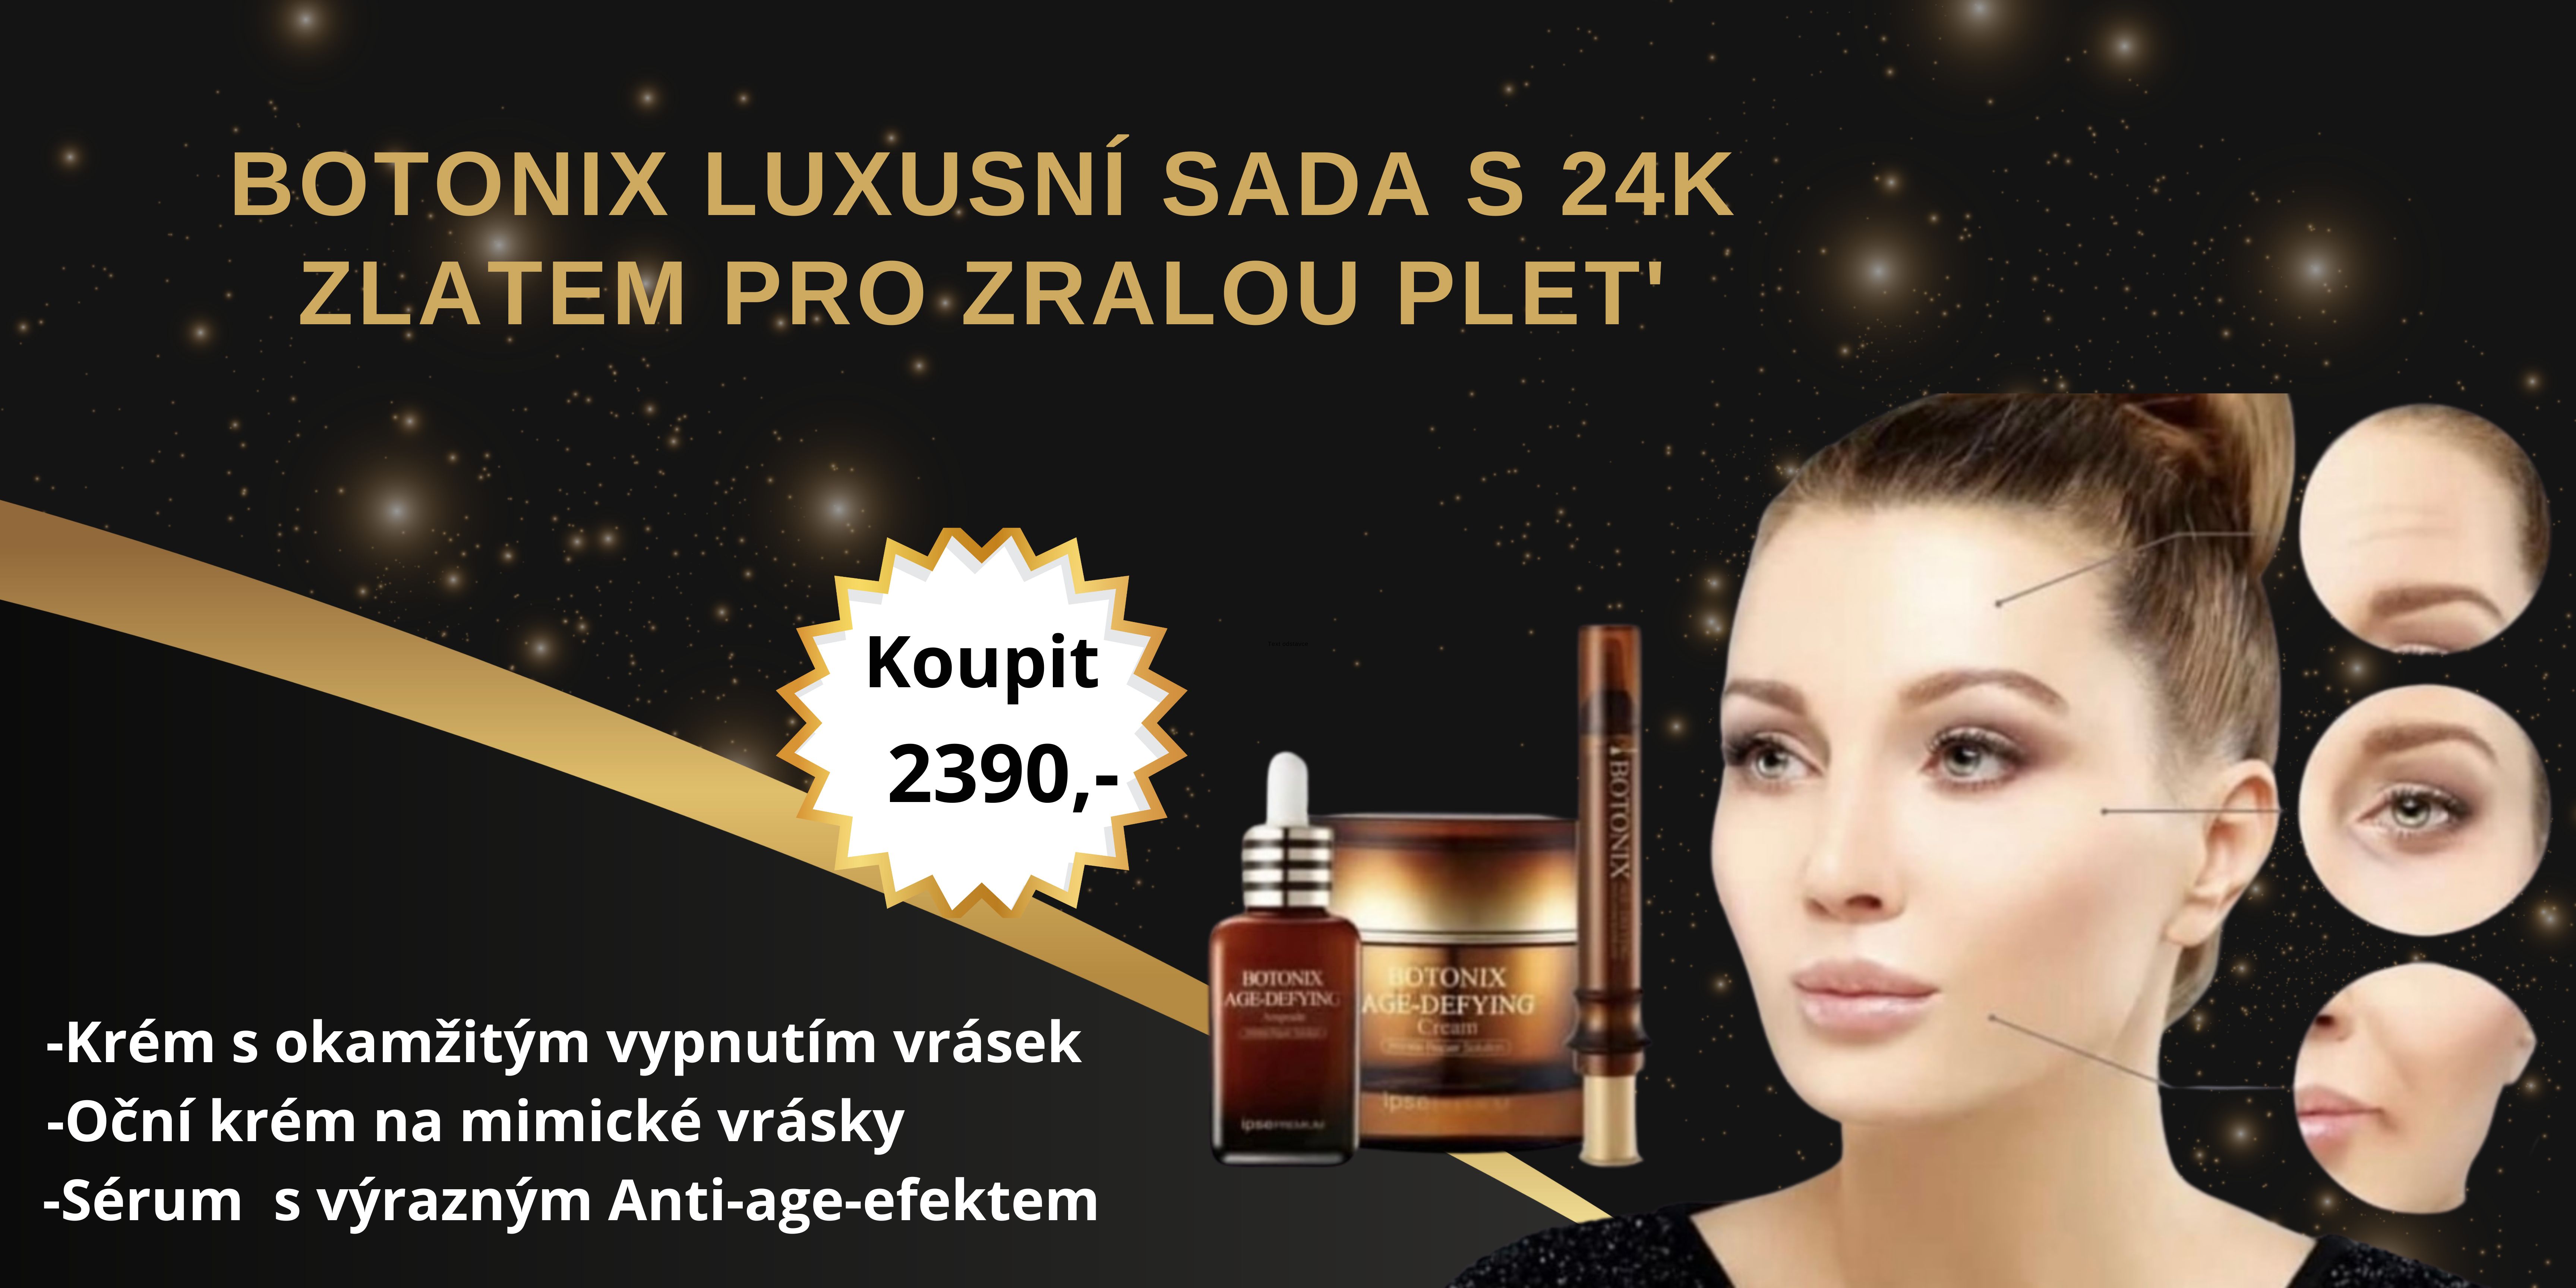 https://www.novaplet.cz/botonix-luxusni-sada-3-kusu-s-24k-zlatem/